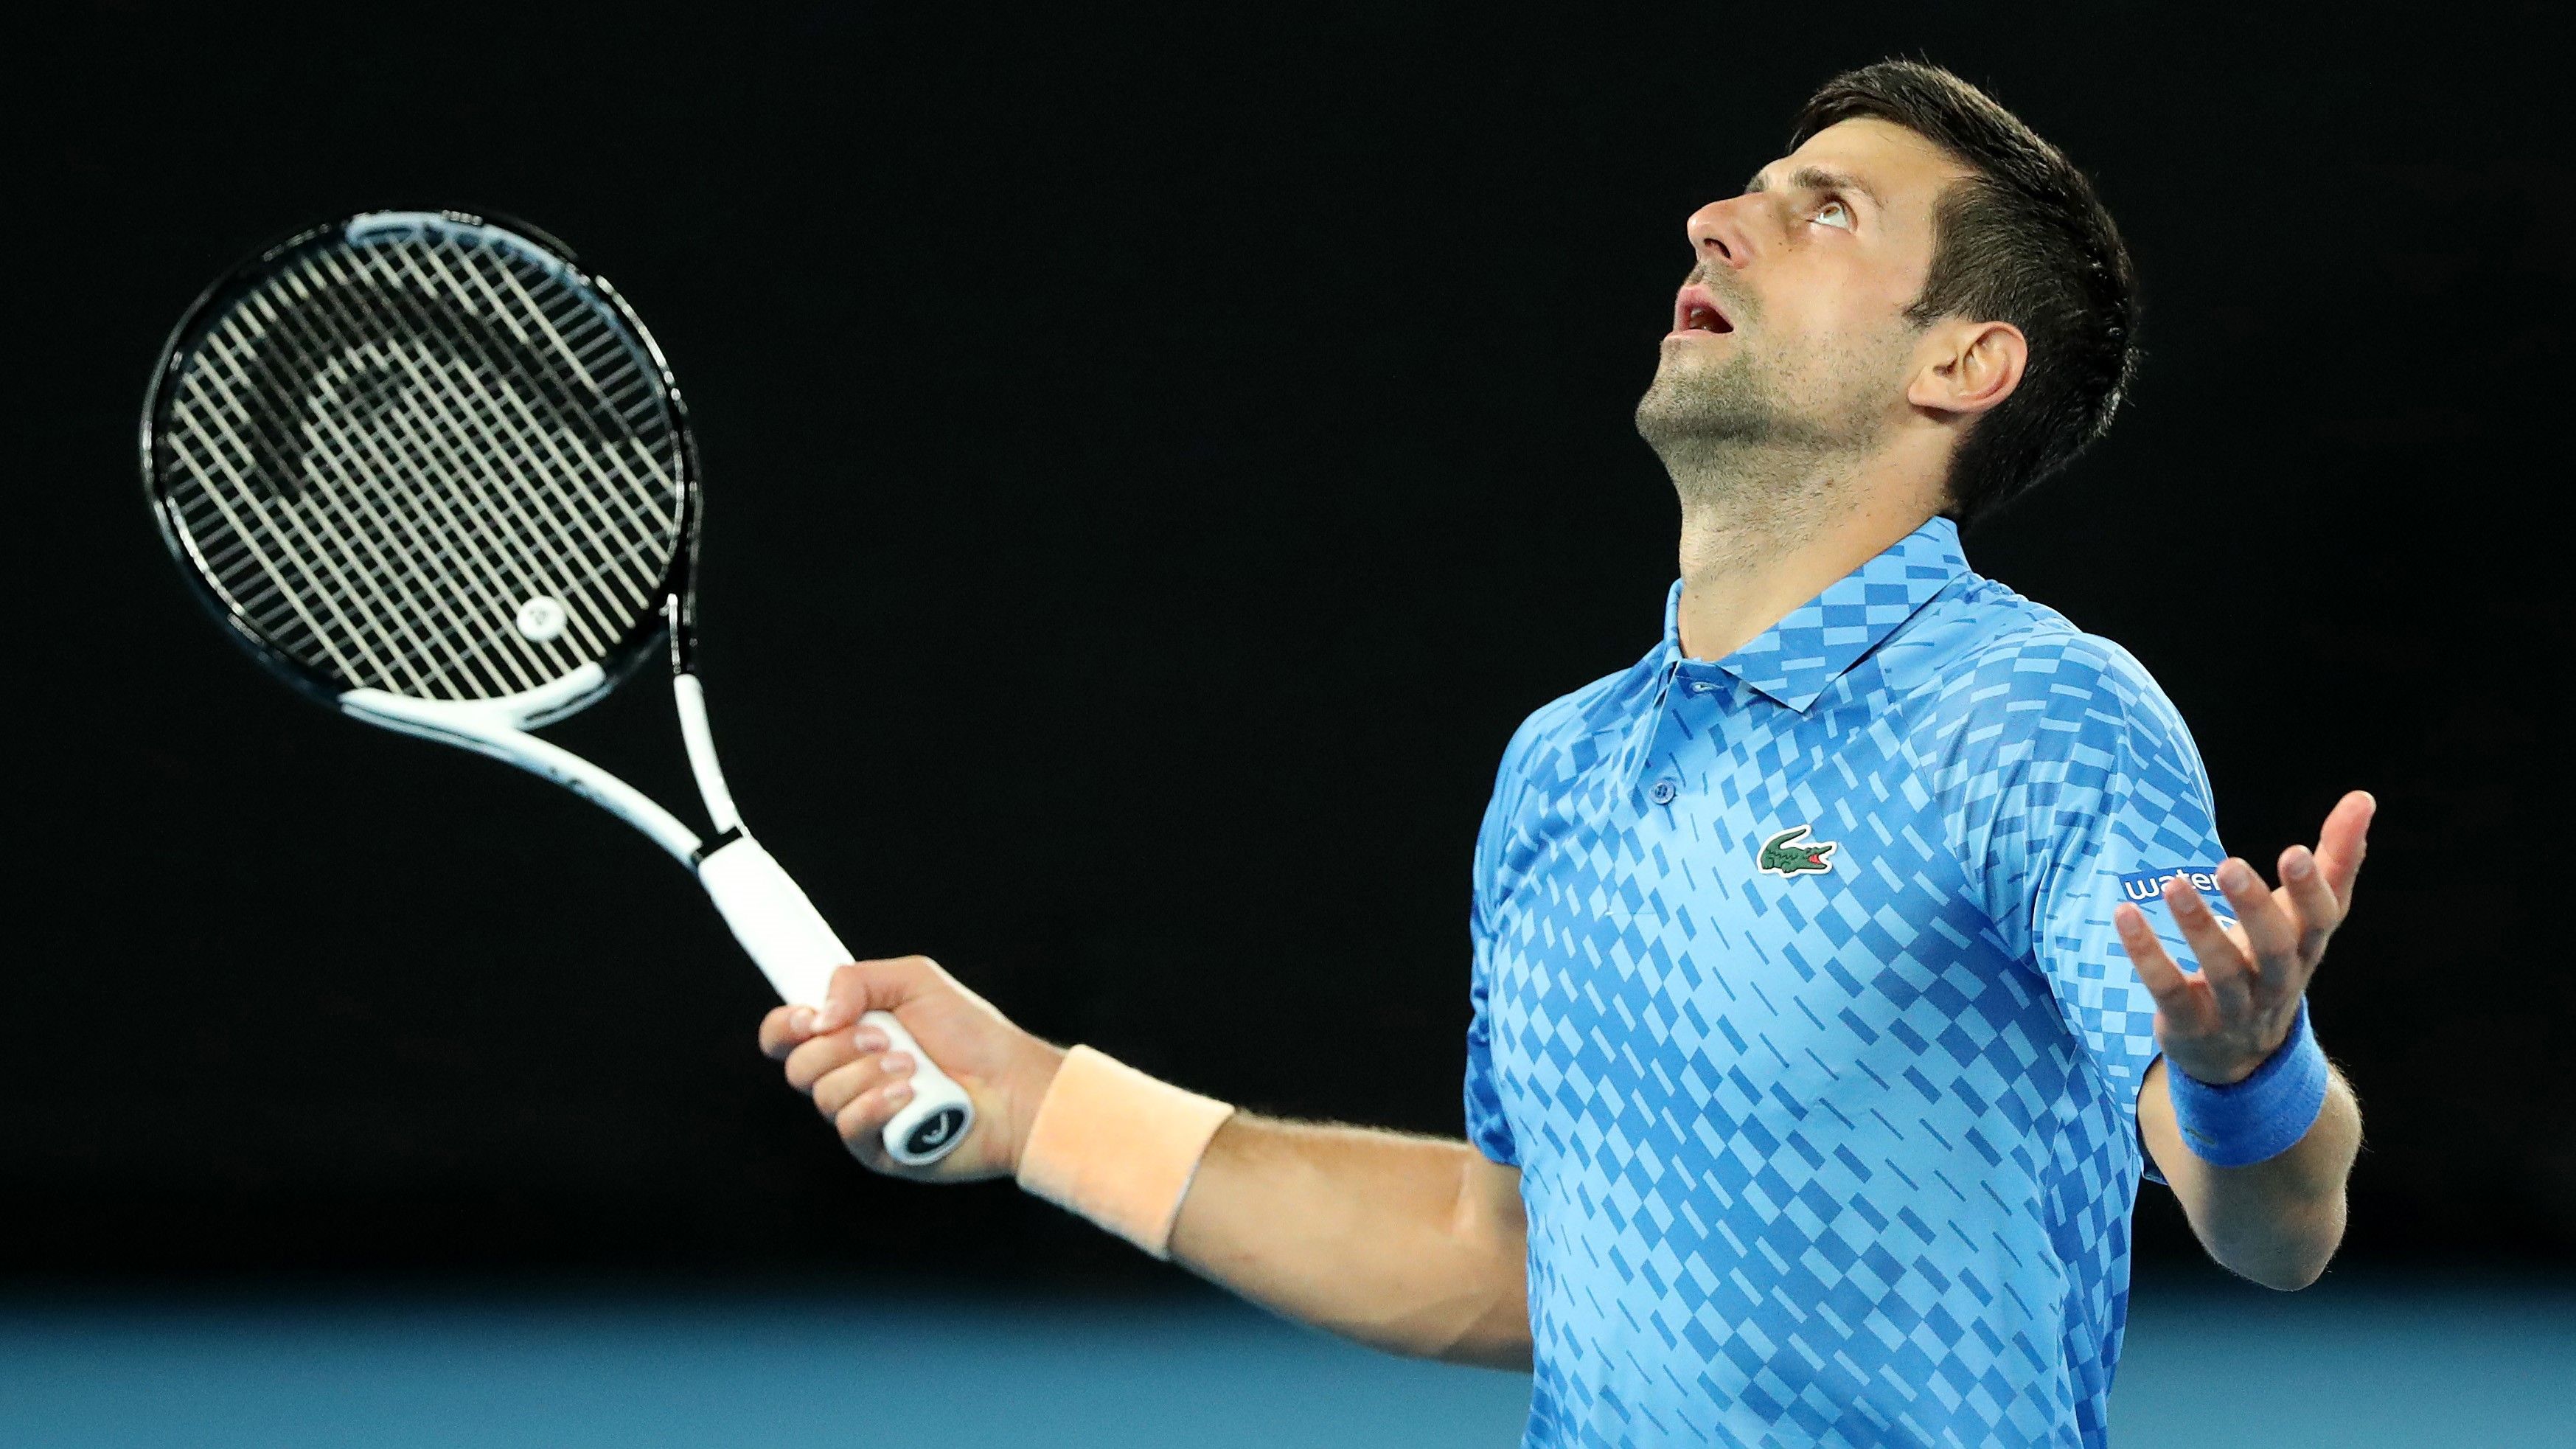 Novak Djokovic's injury cloud clears after first round Australian Open demo derby